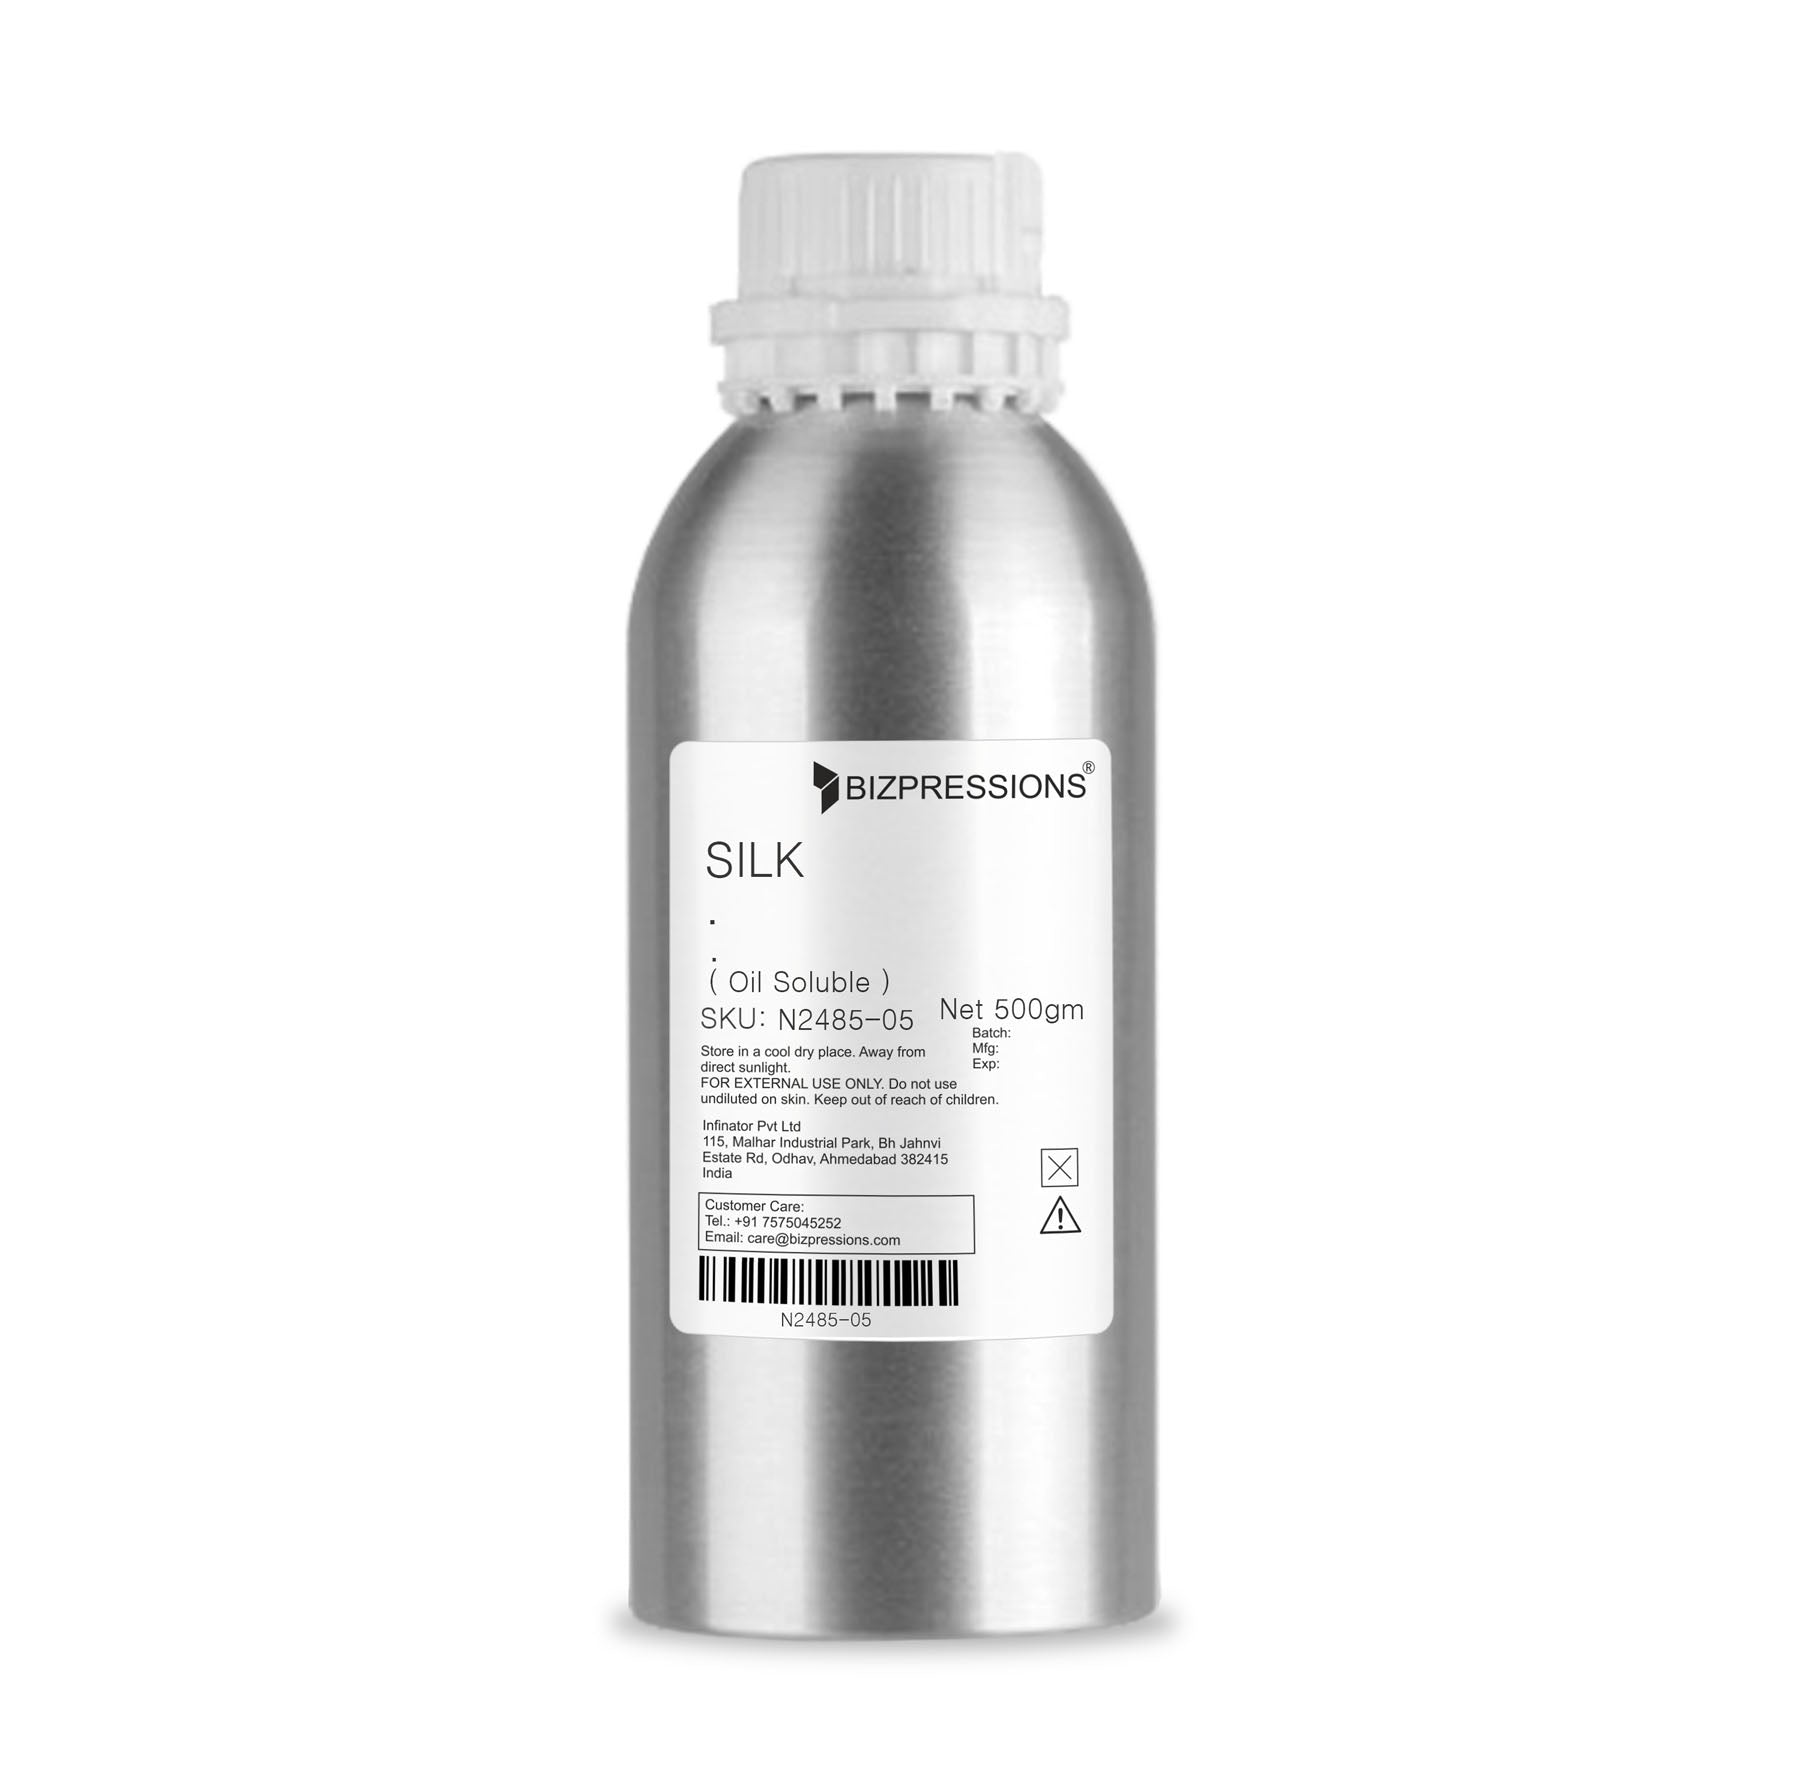 SILK - Fragrance ( Oil Soluble ) - 500 gm